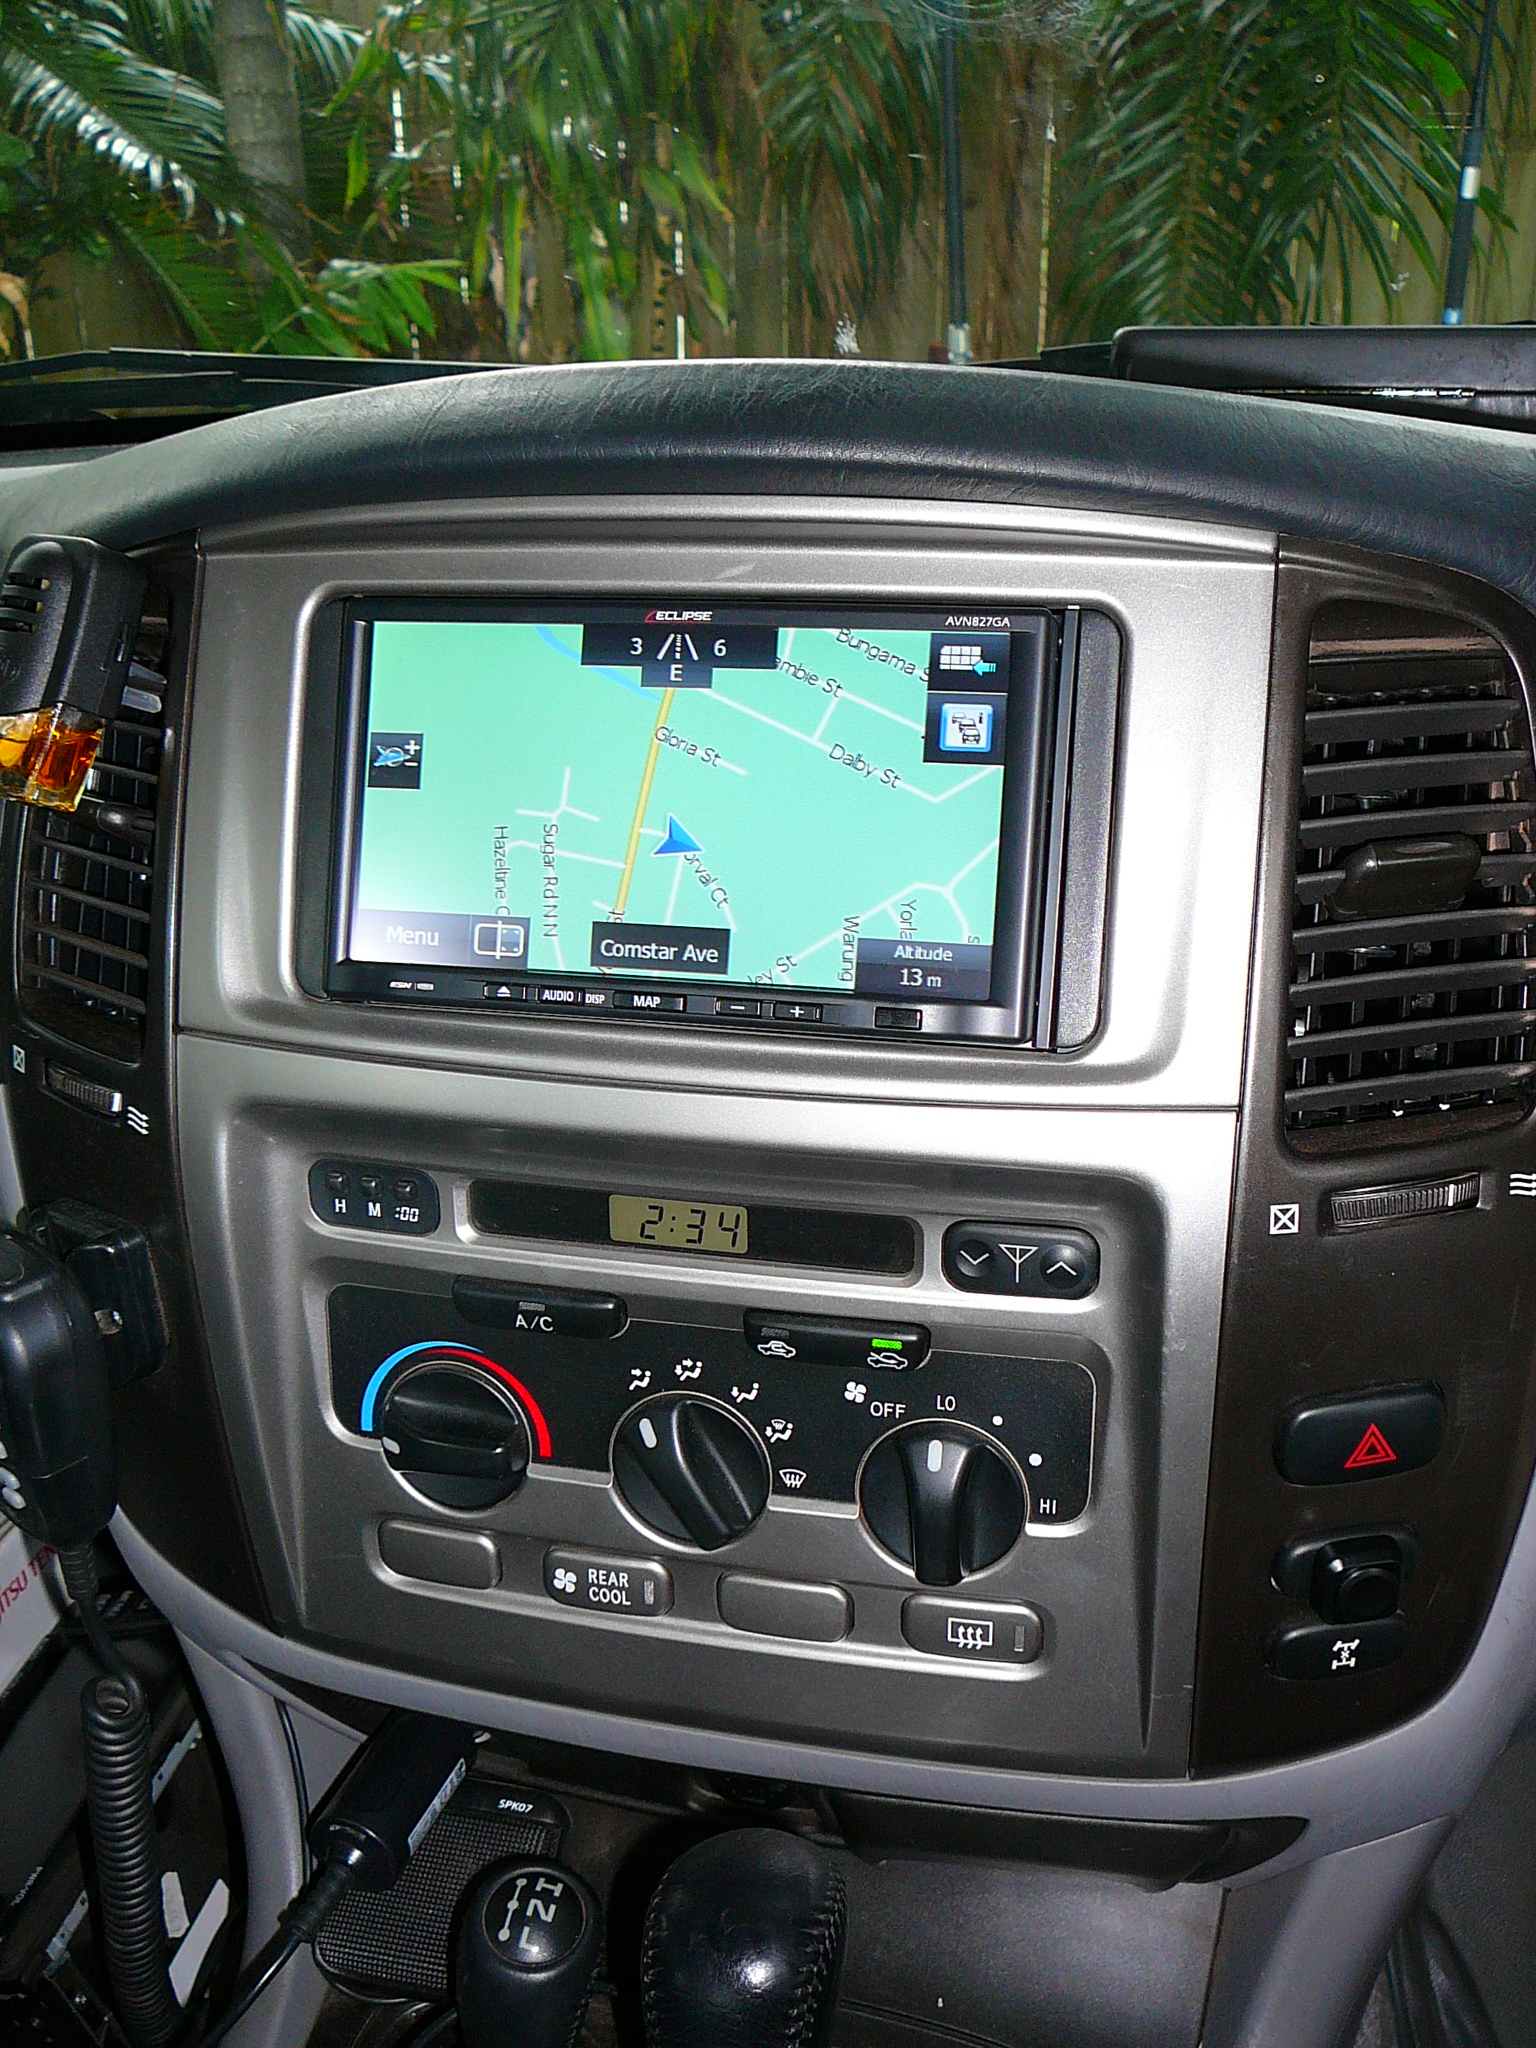 Toyota Landcruiser 100 Series, Eclipse GPS Navigation